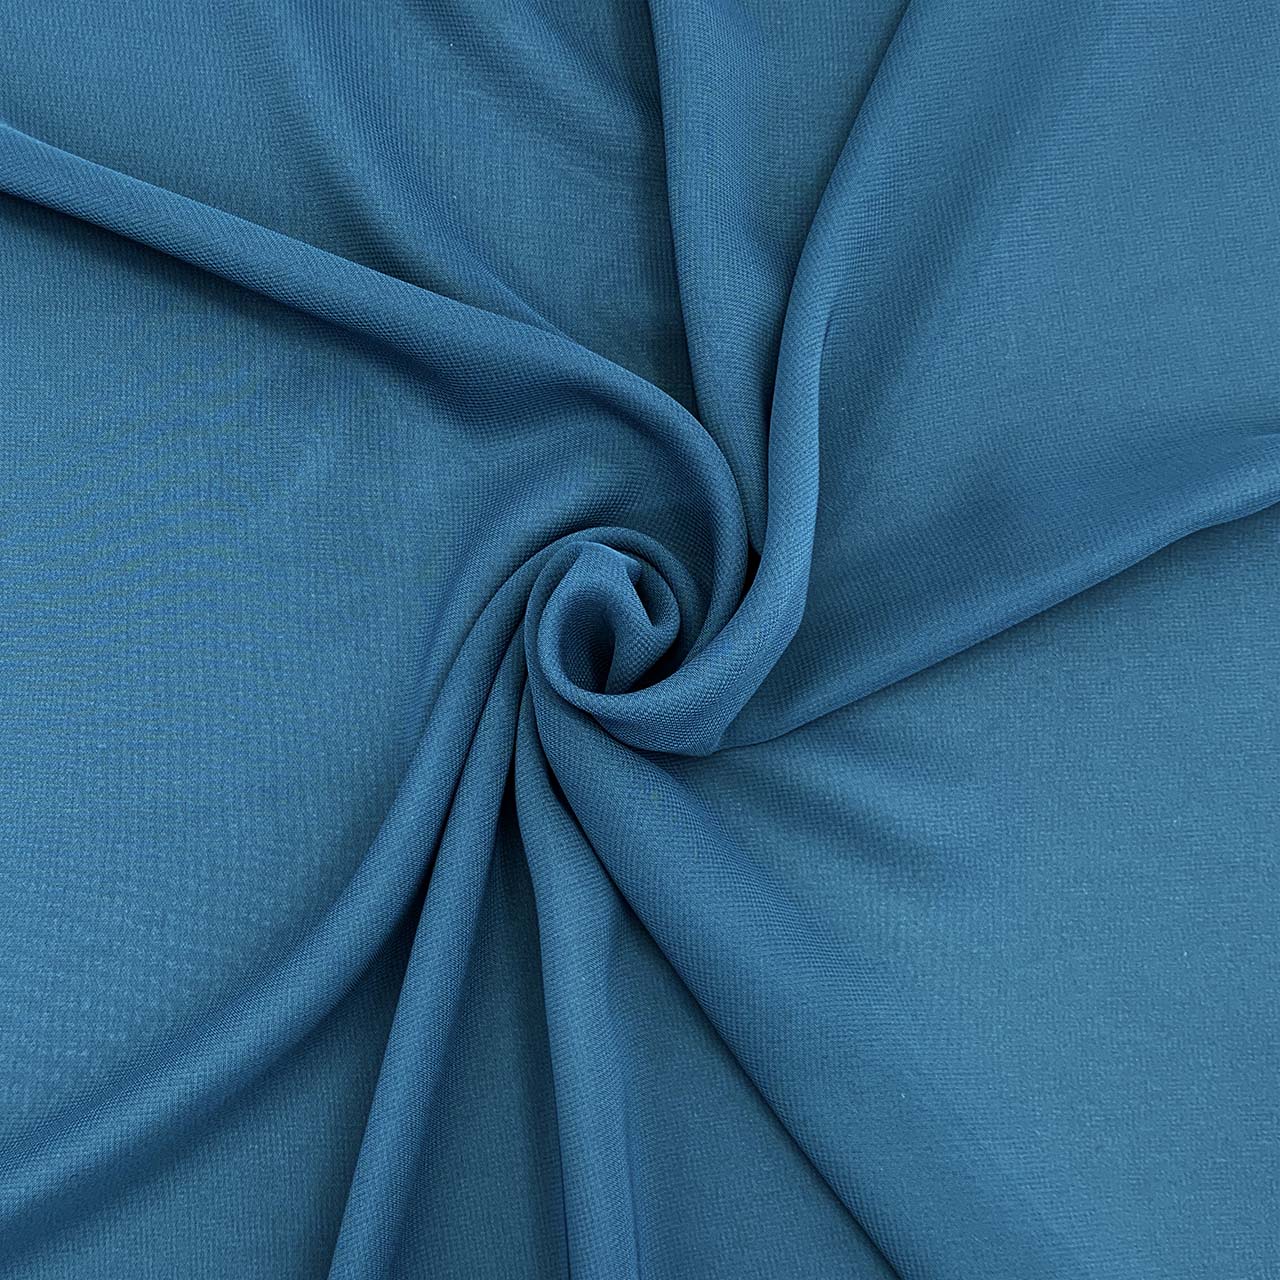 polyester chiffon peacock blue fabric